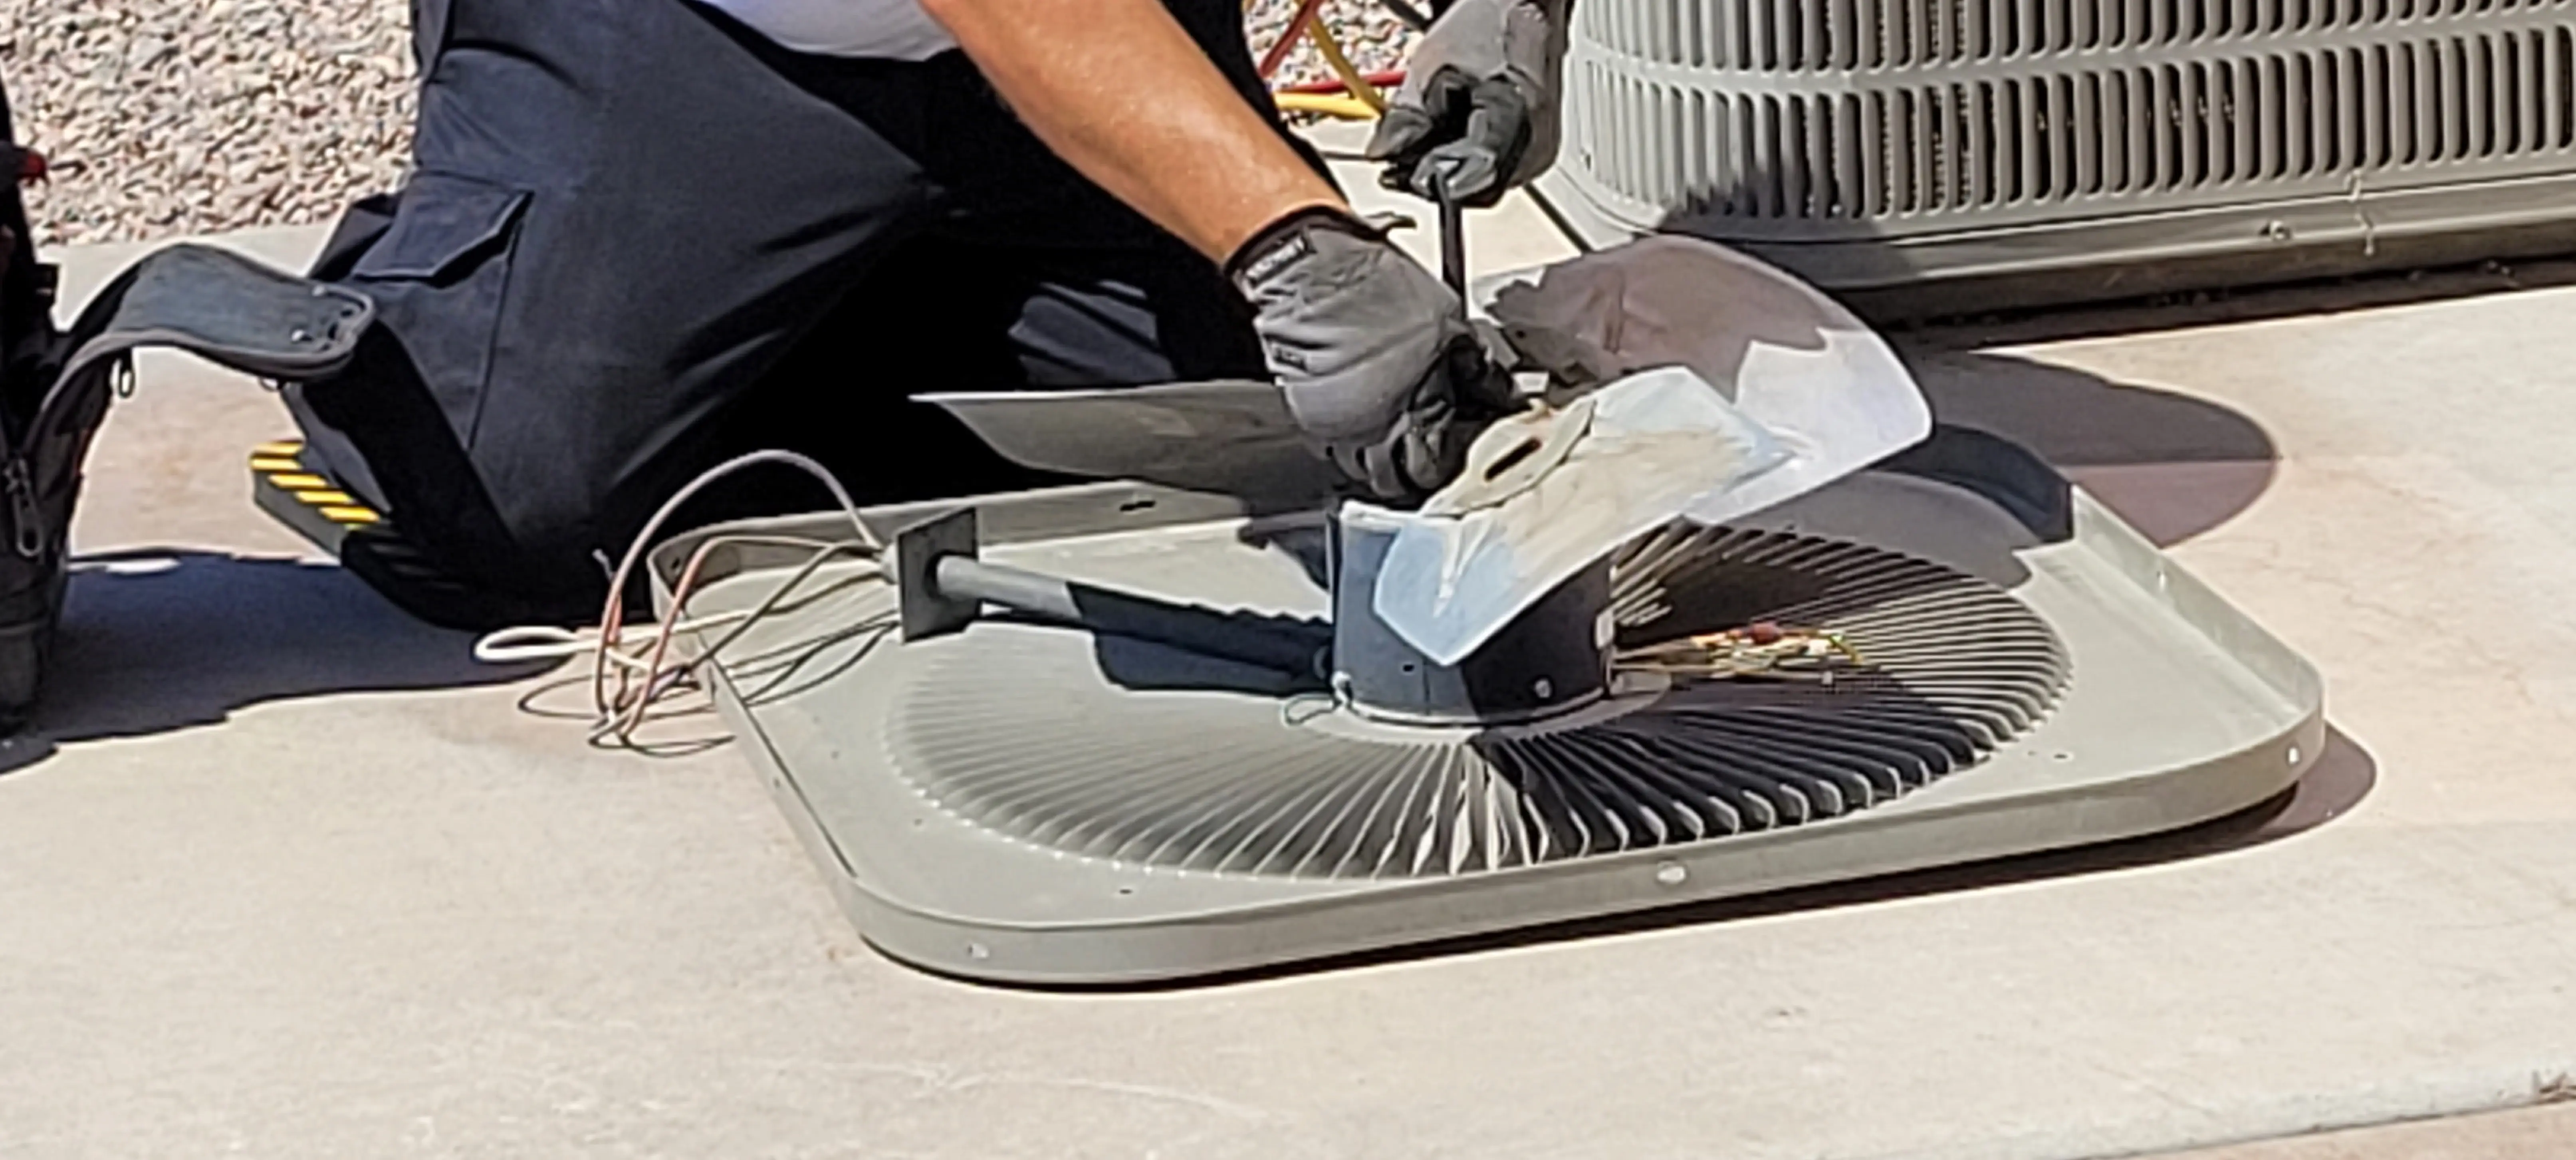 Air-Conditioning-Repair--in-Reno-Nevada-Air-Conditioning-Repair-5987604-image